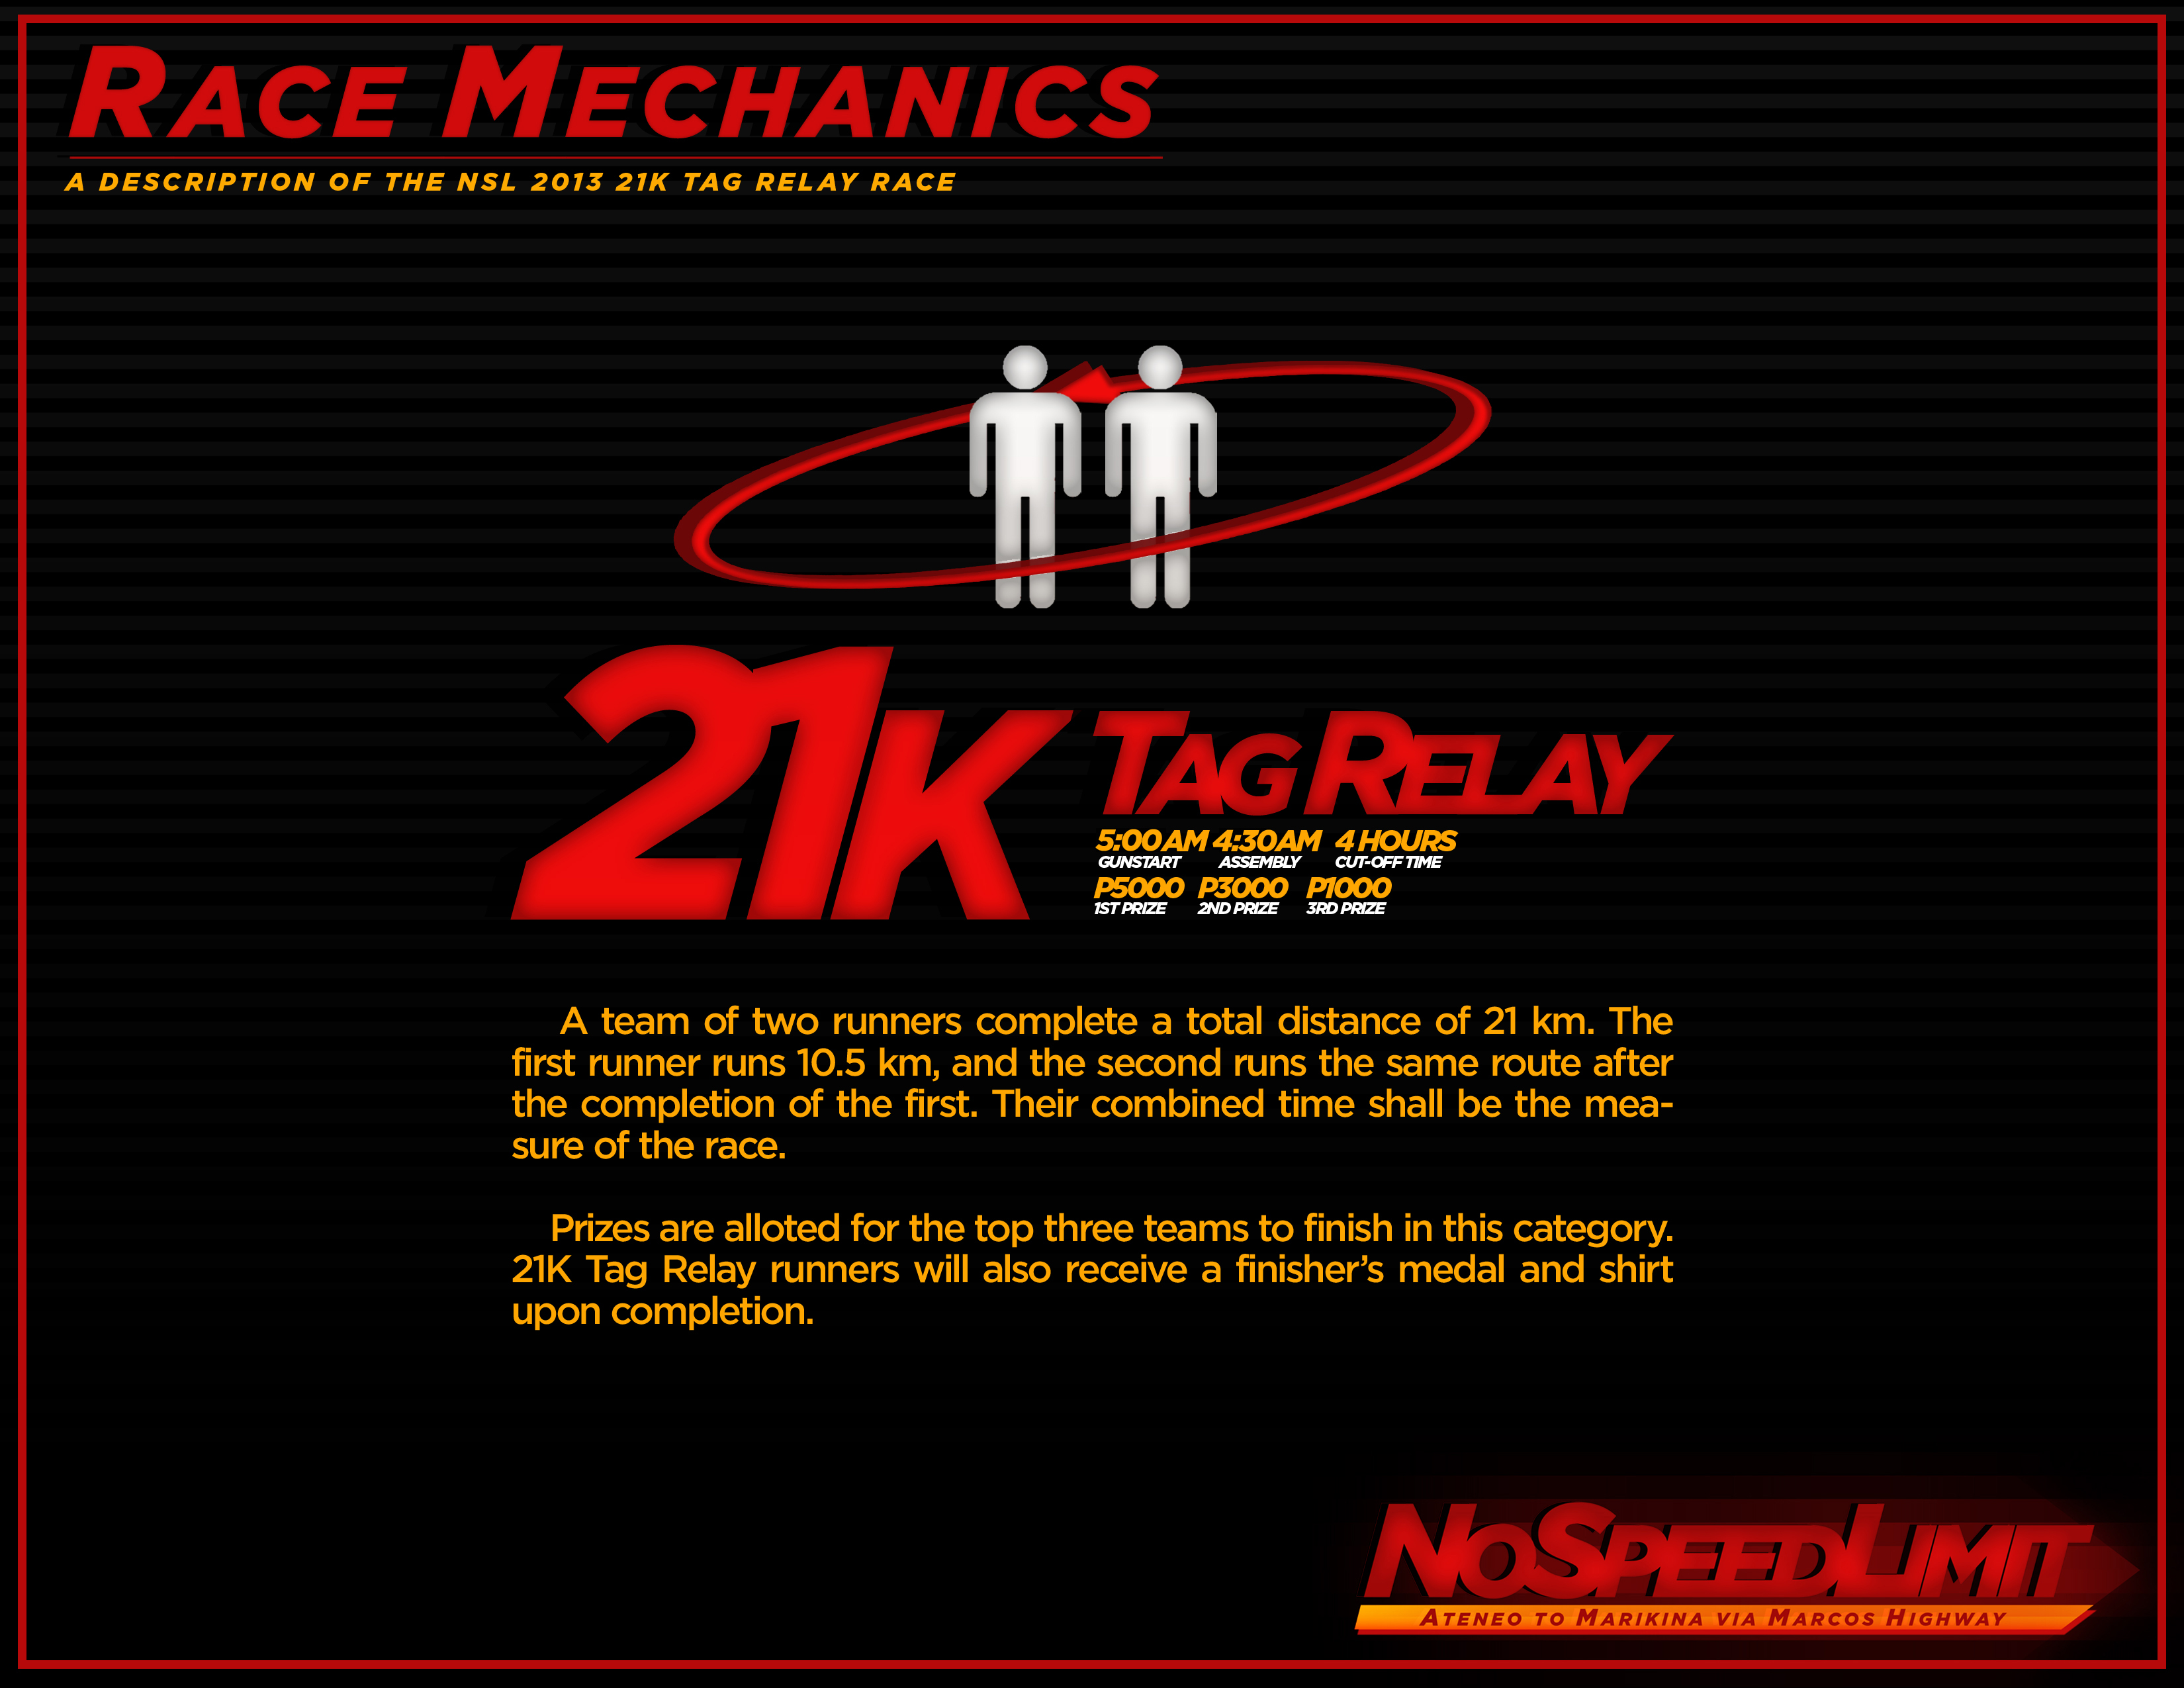 no-speed-limit-run-2013-21k-tag-relay-race-mechanics